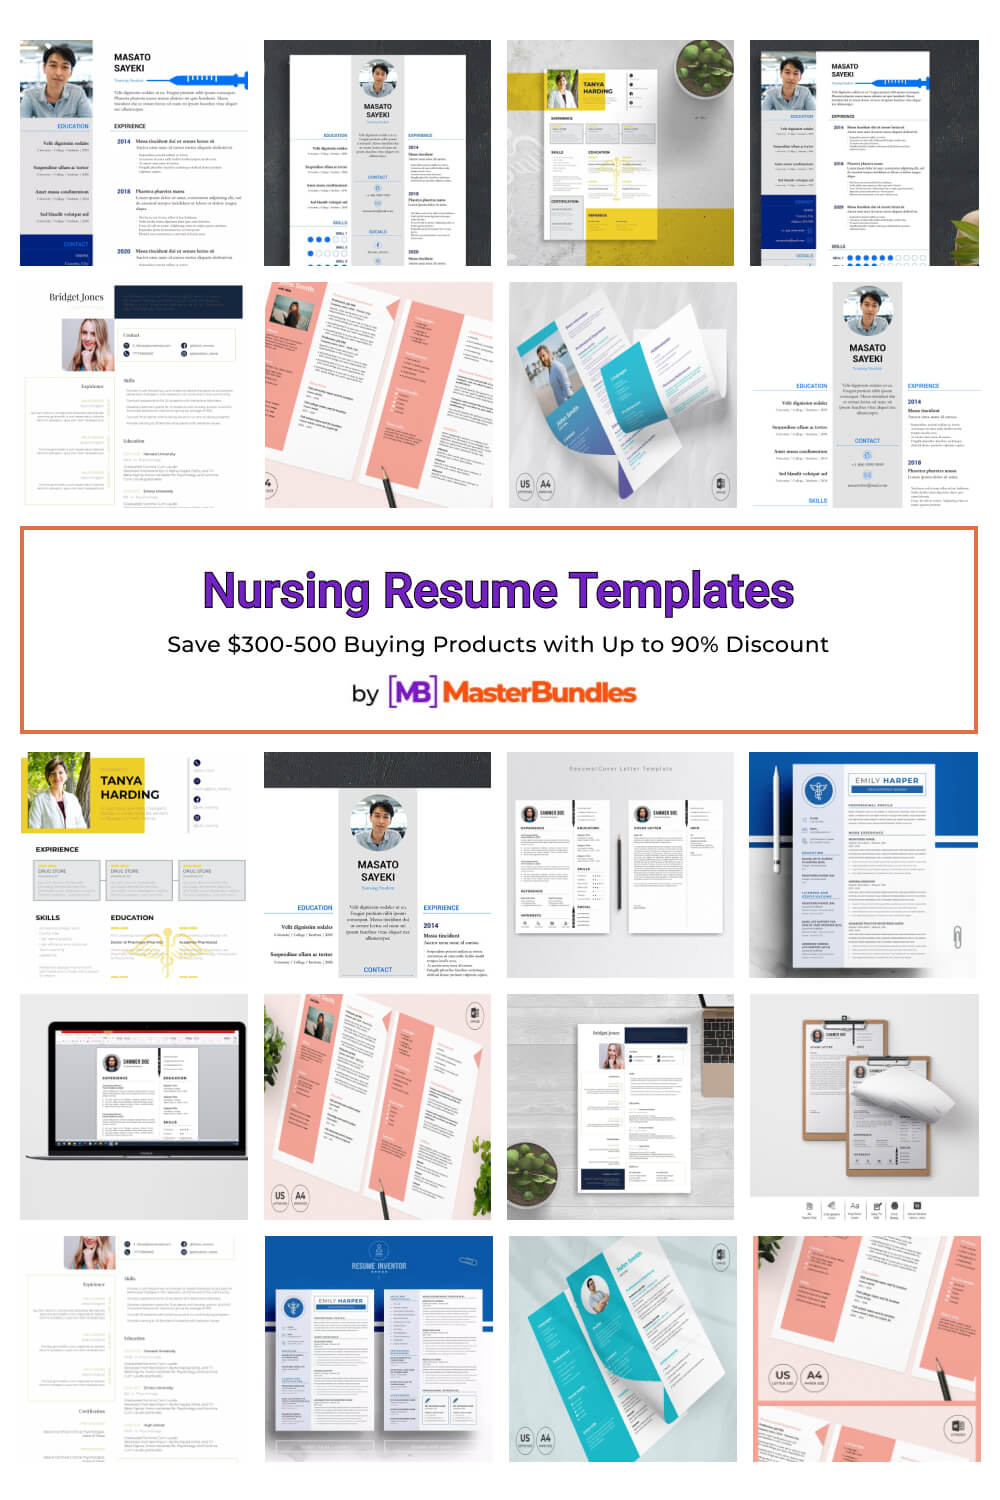 nursing resume templates pinterest image.